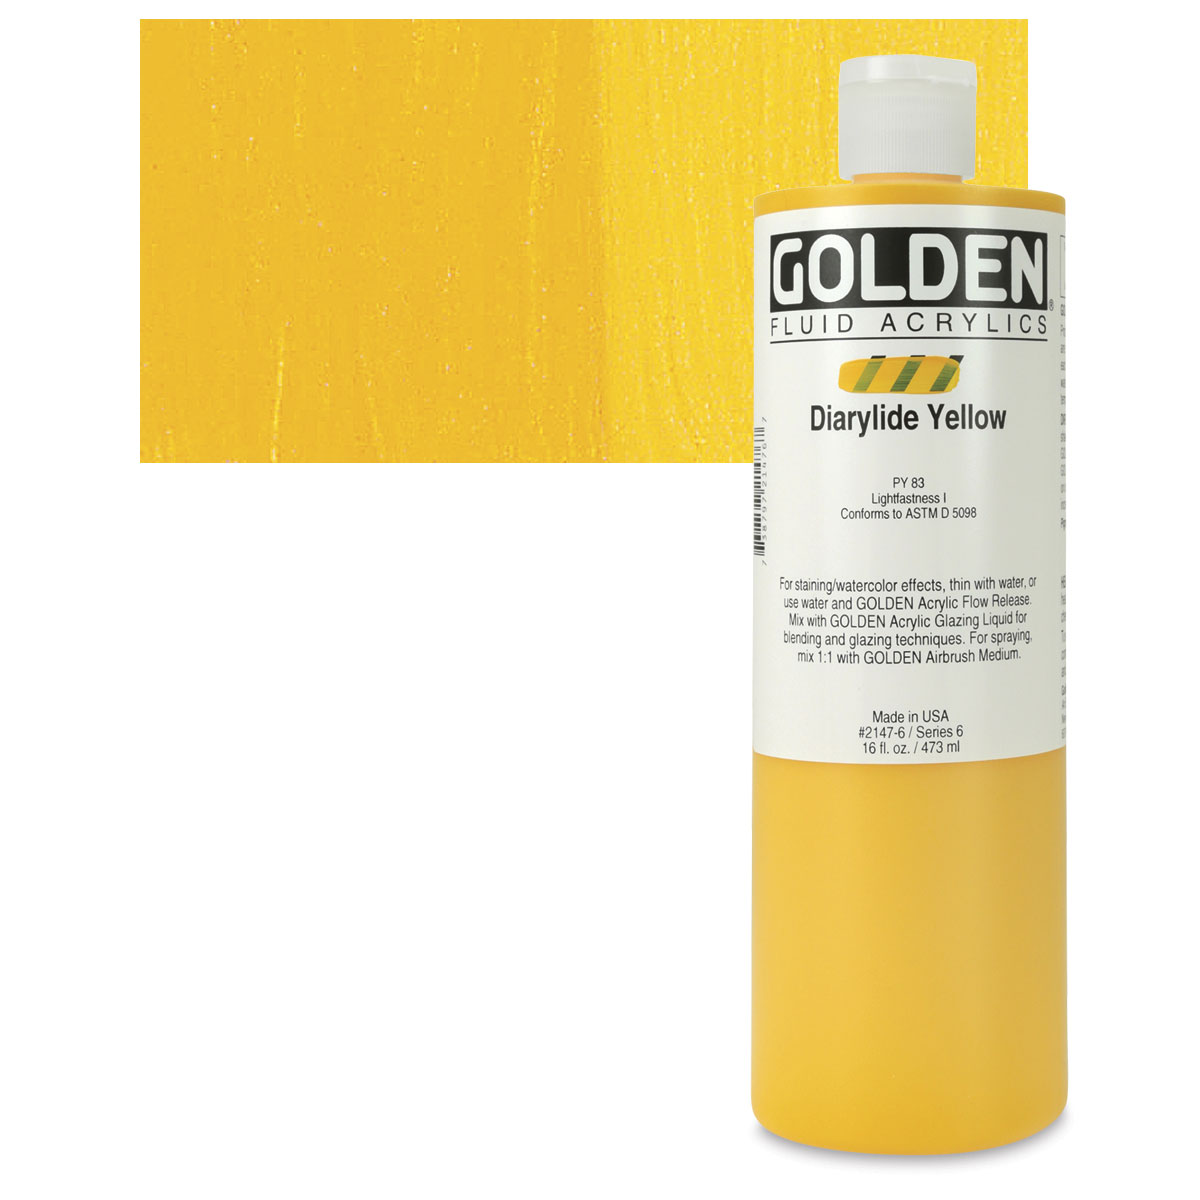 Golden Fluid Acrylics - Iridescent Silver (Fine), 1 oz bottle